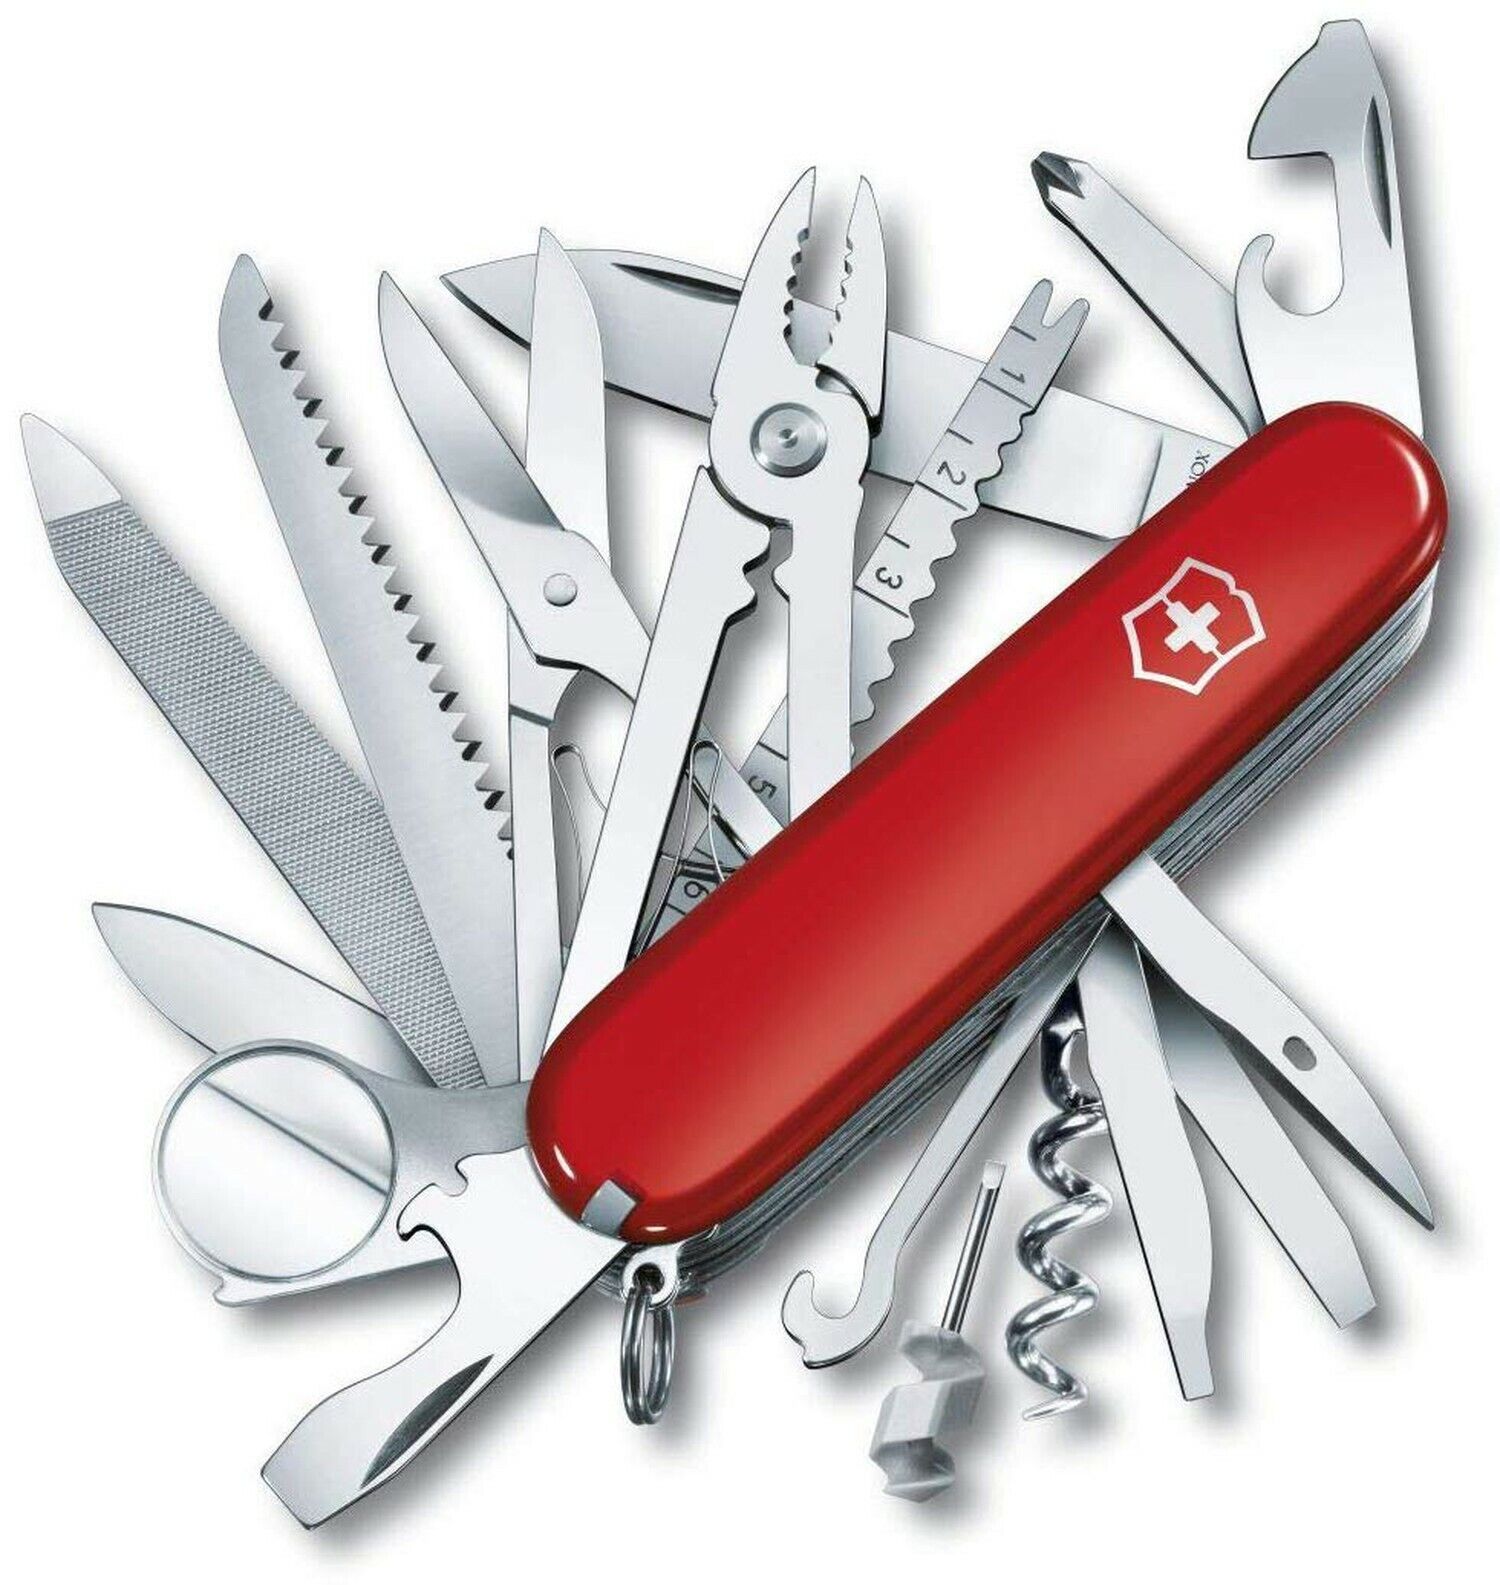 Victorinox Swiss Army Multi-Tool, SwissChamp Pocket Knife, Red 1.6795